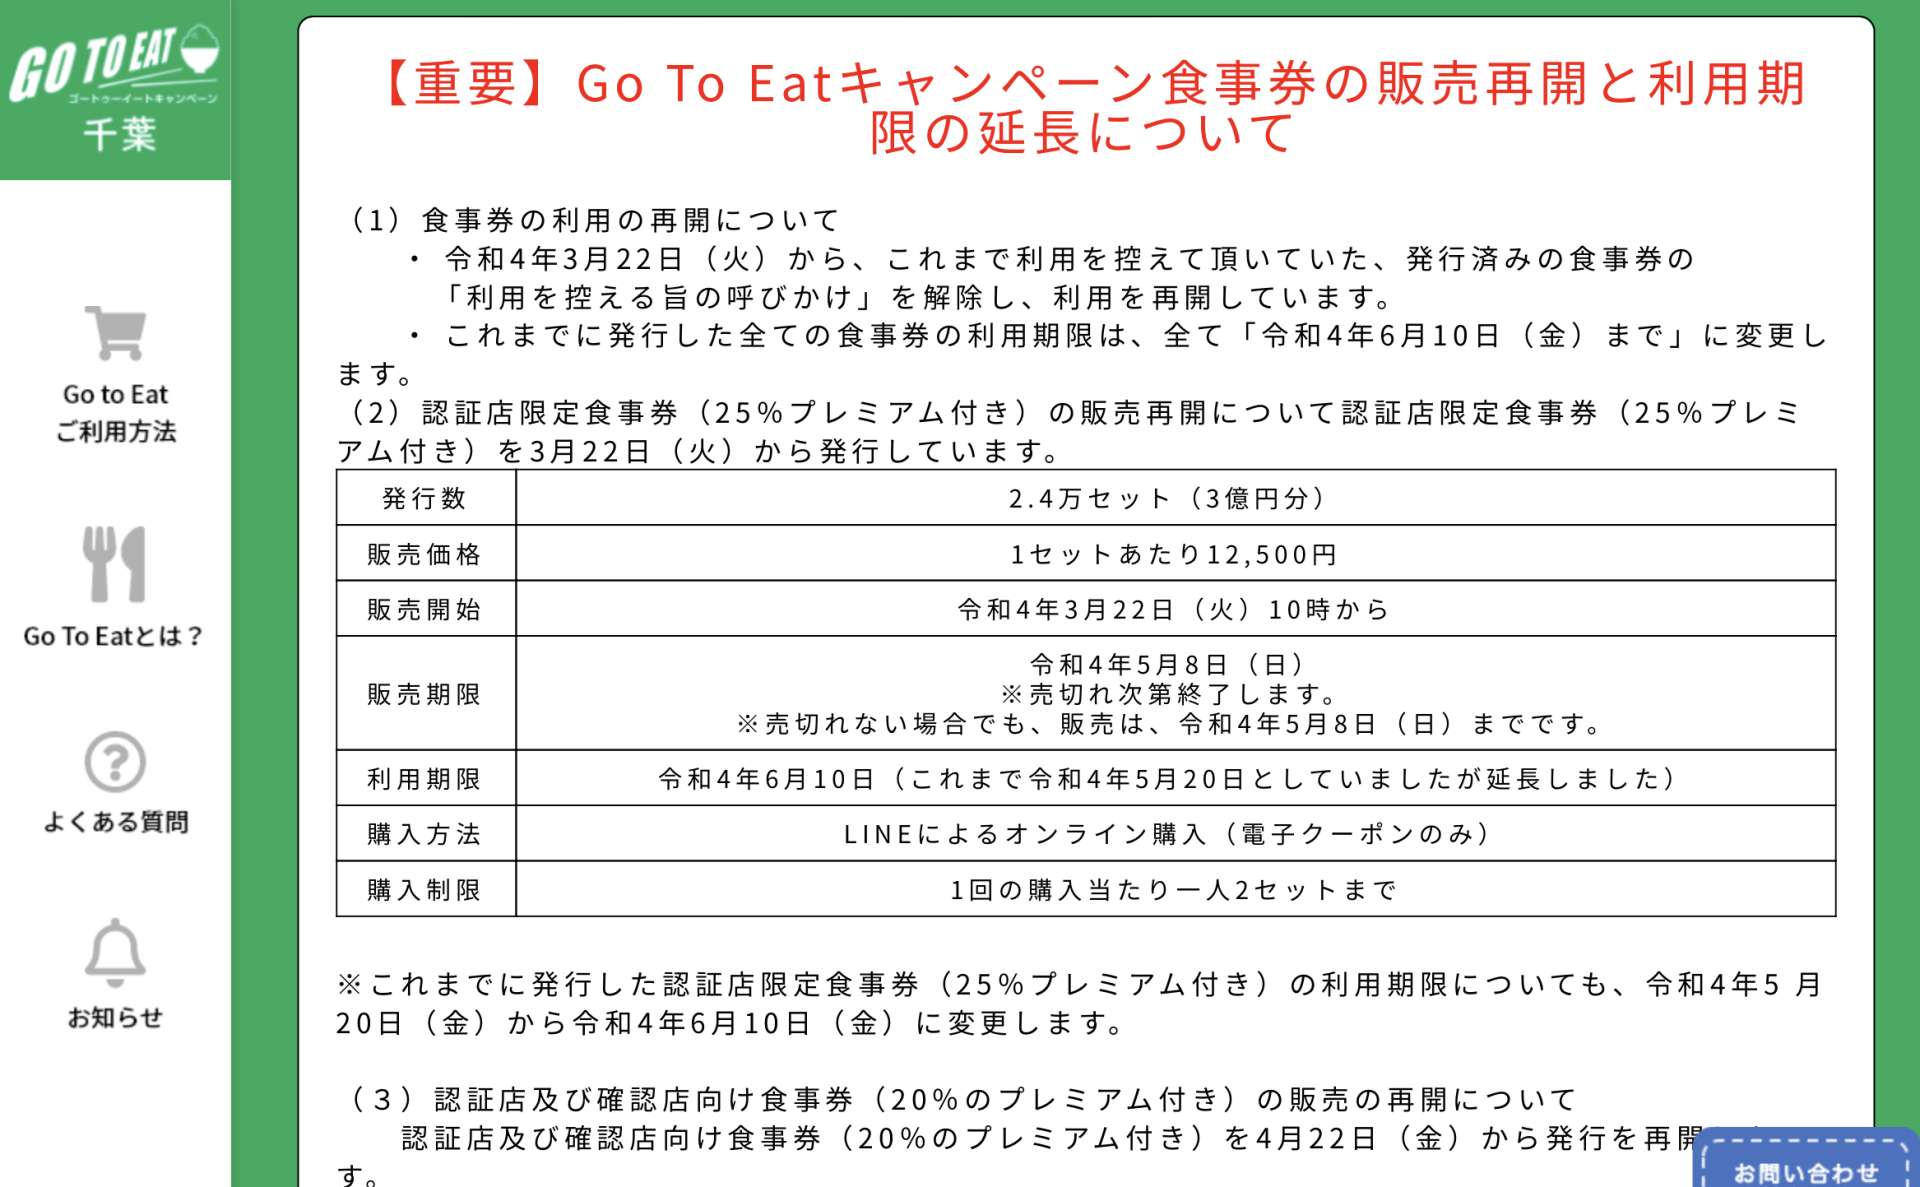 Go to eat販売再開…使用期間延長6/10(金)まで当店でもご利用いただけます。